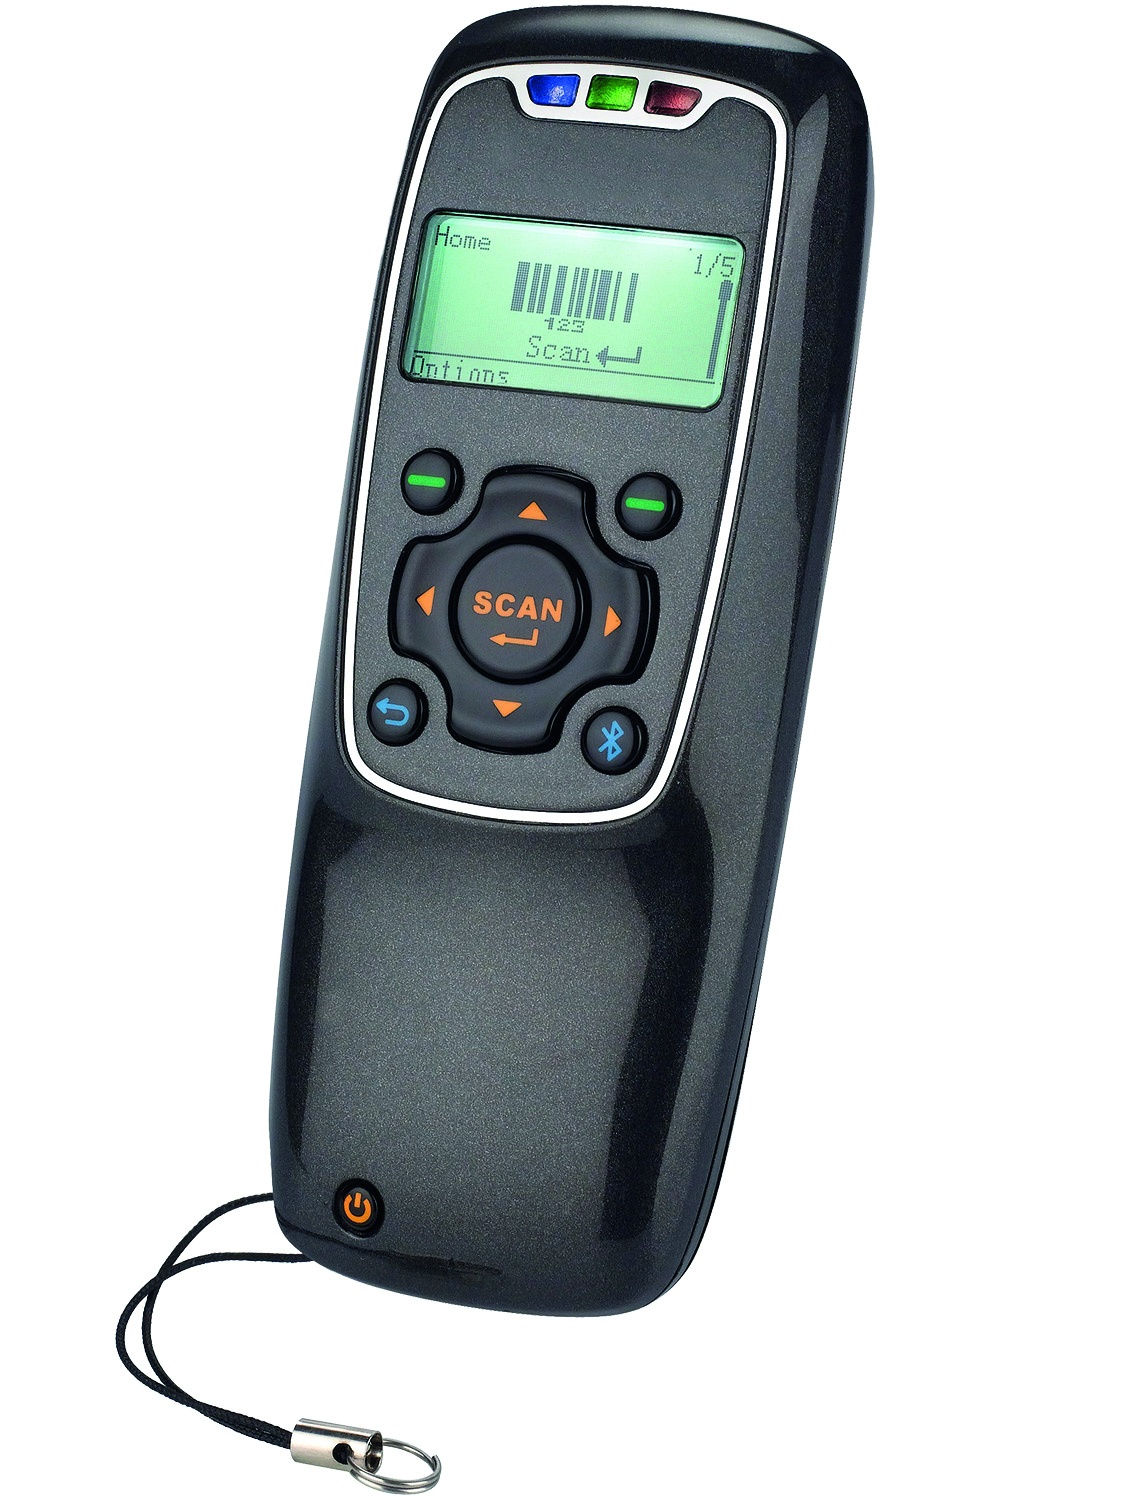 Barcode scanner AS-7210 from ARTDEV